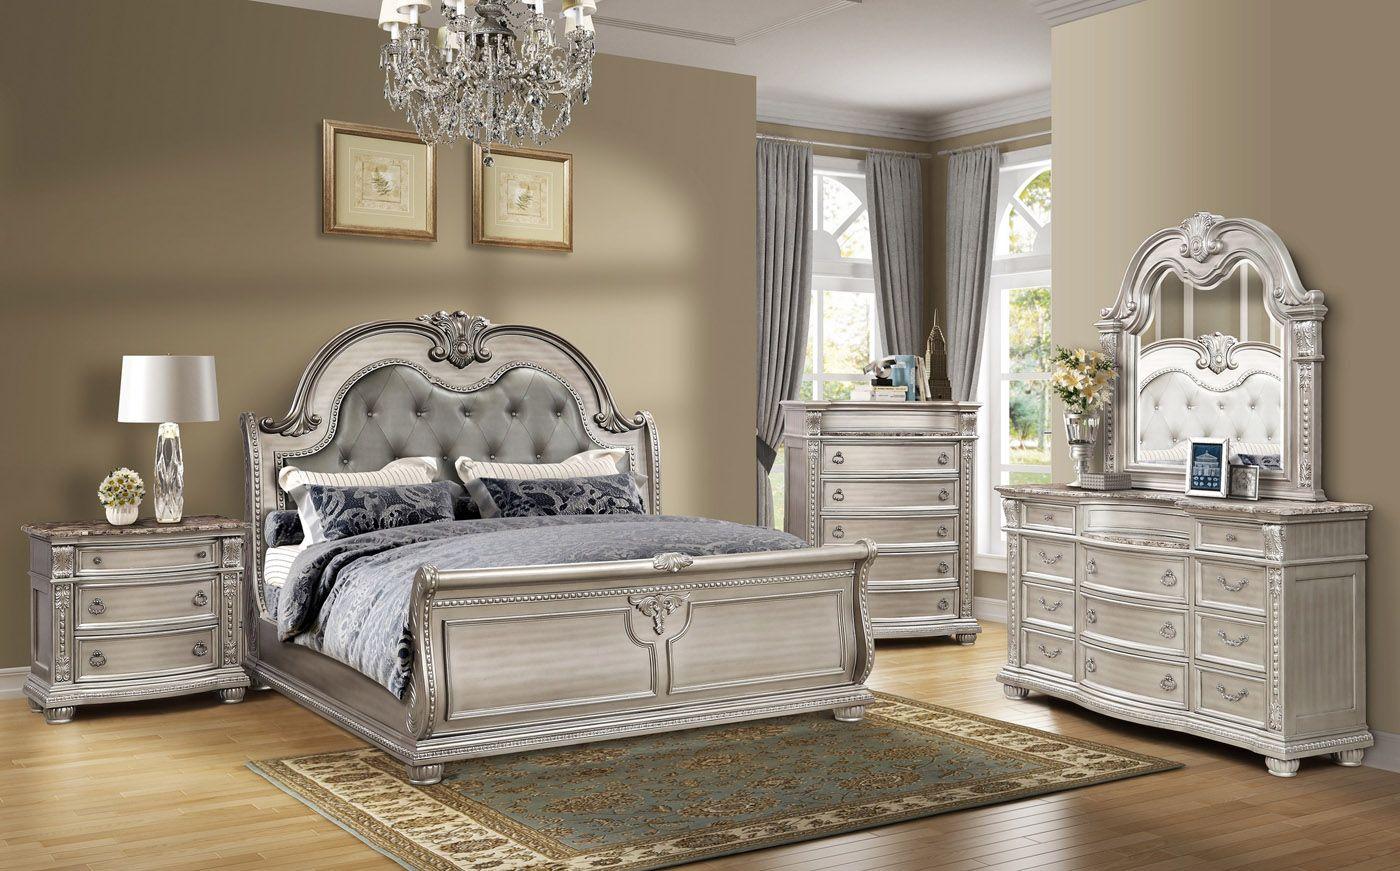 McFerran Furniture B9506 Sleigh Bedroom Set